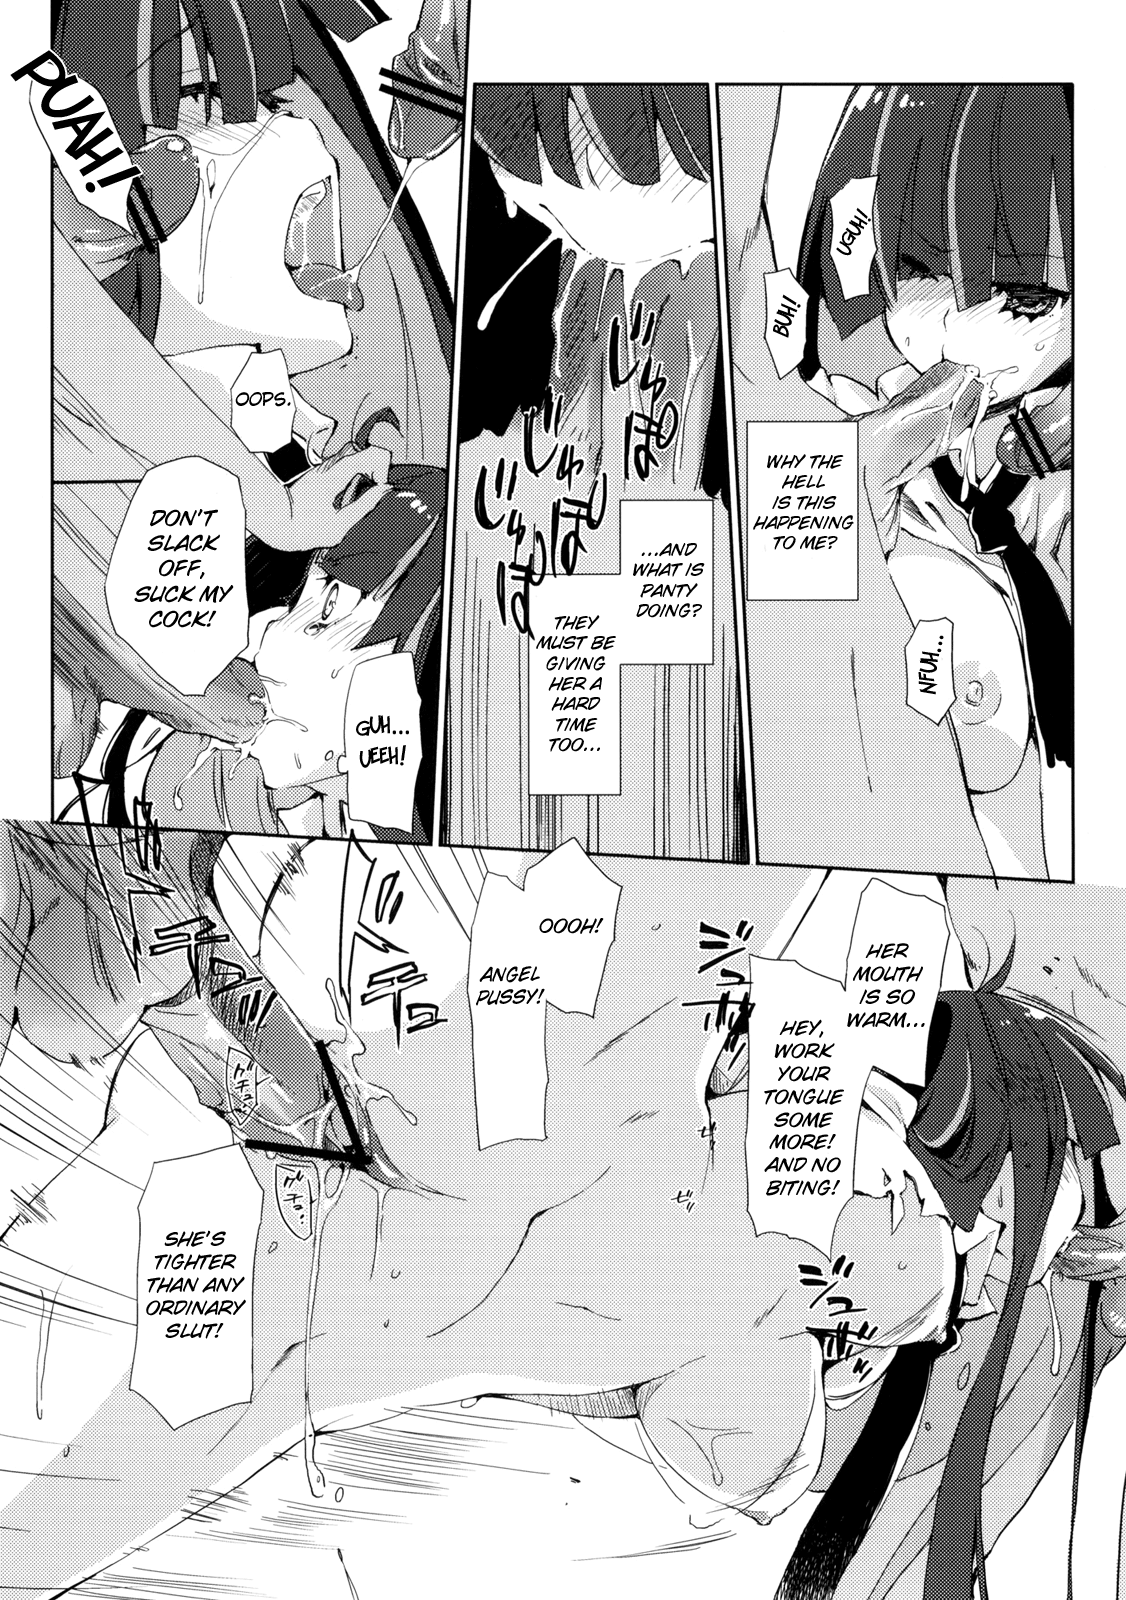 inmoral unmoral hentai manga picture 9